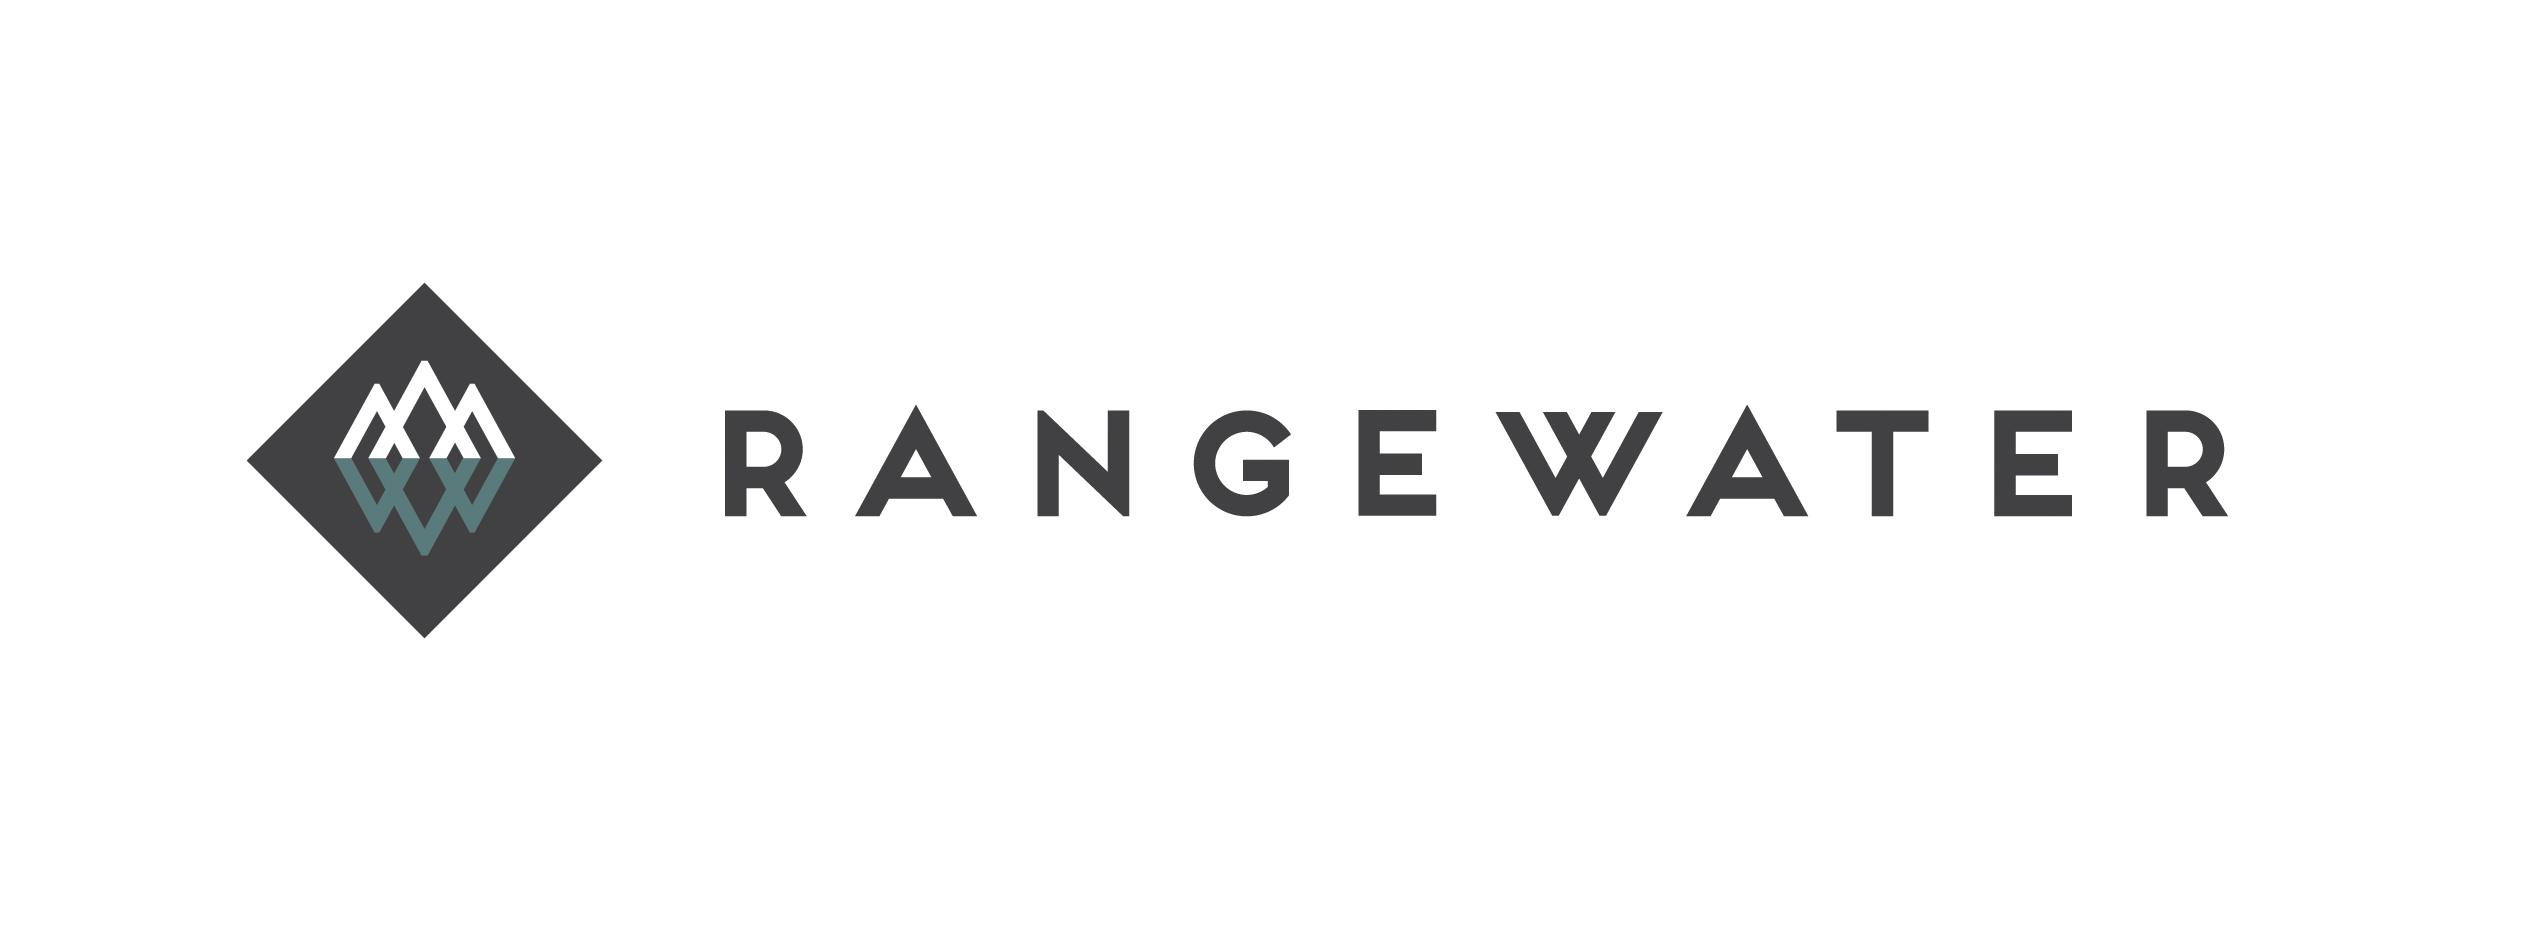 Rangewater logo